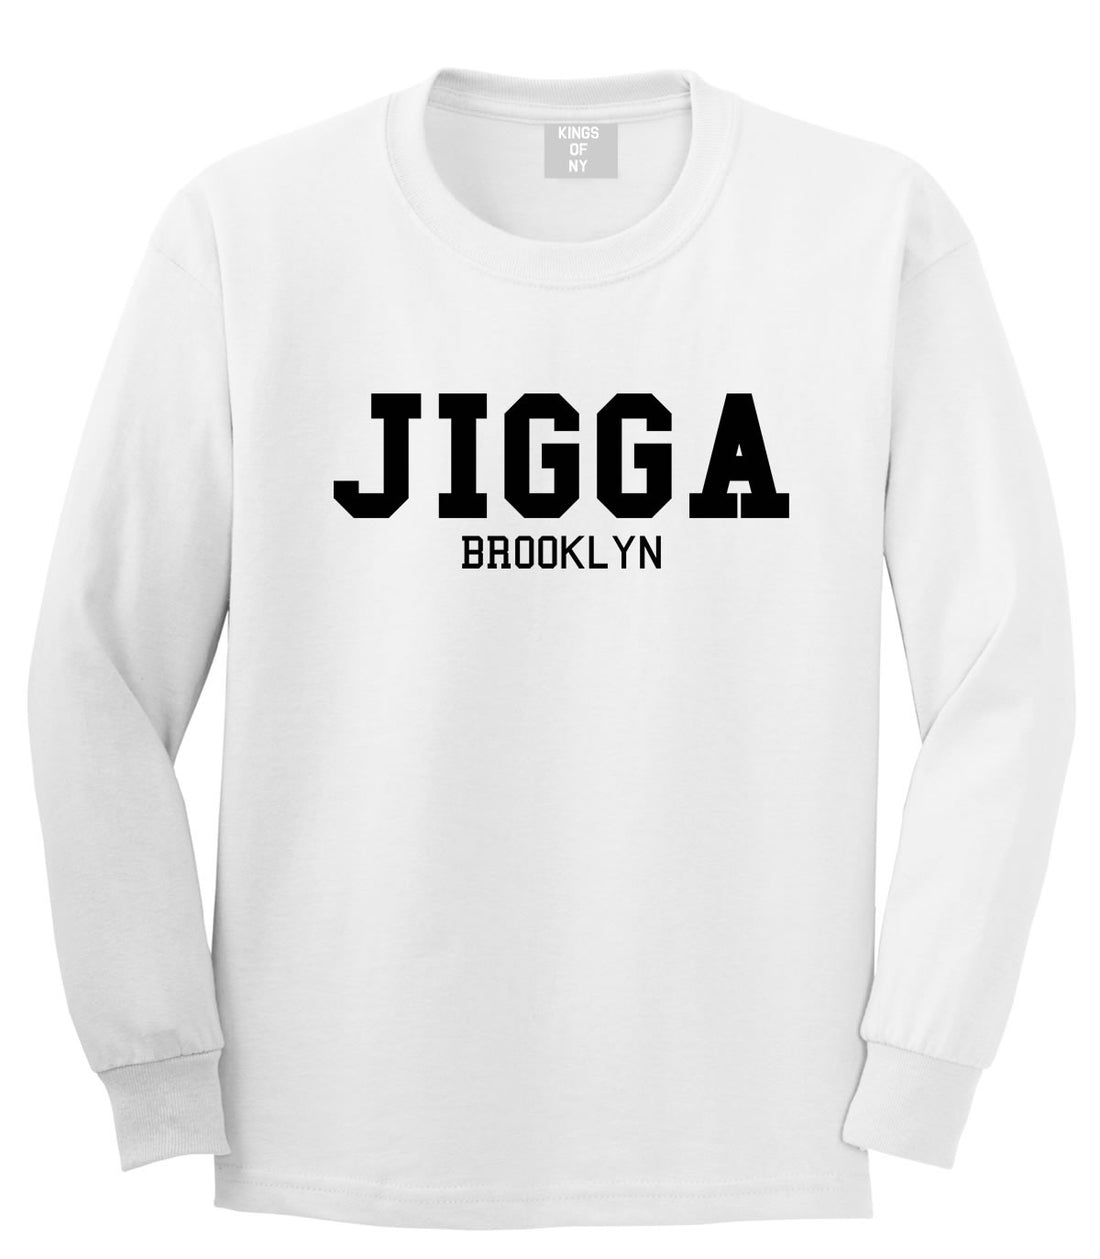 Jigga Brooklyn Long Sleeve T-Shirt in White by Kings Of NY